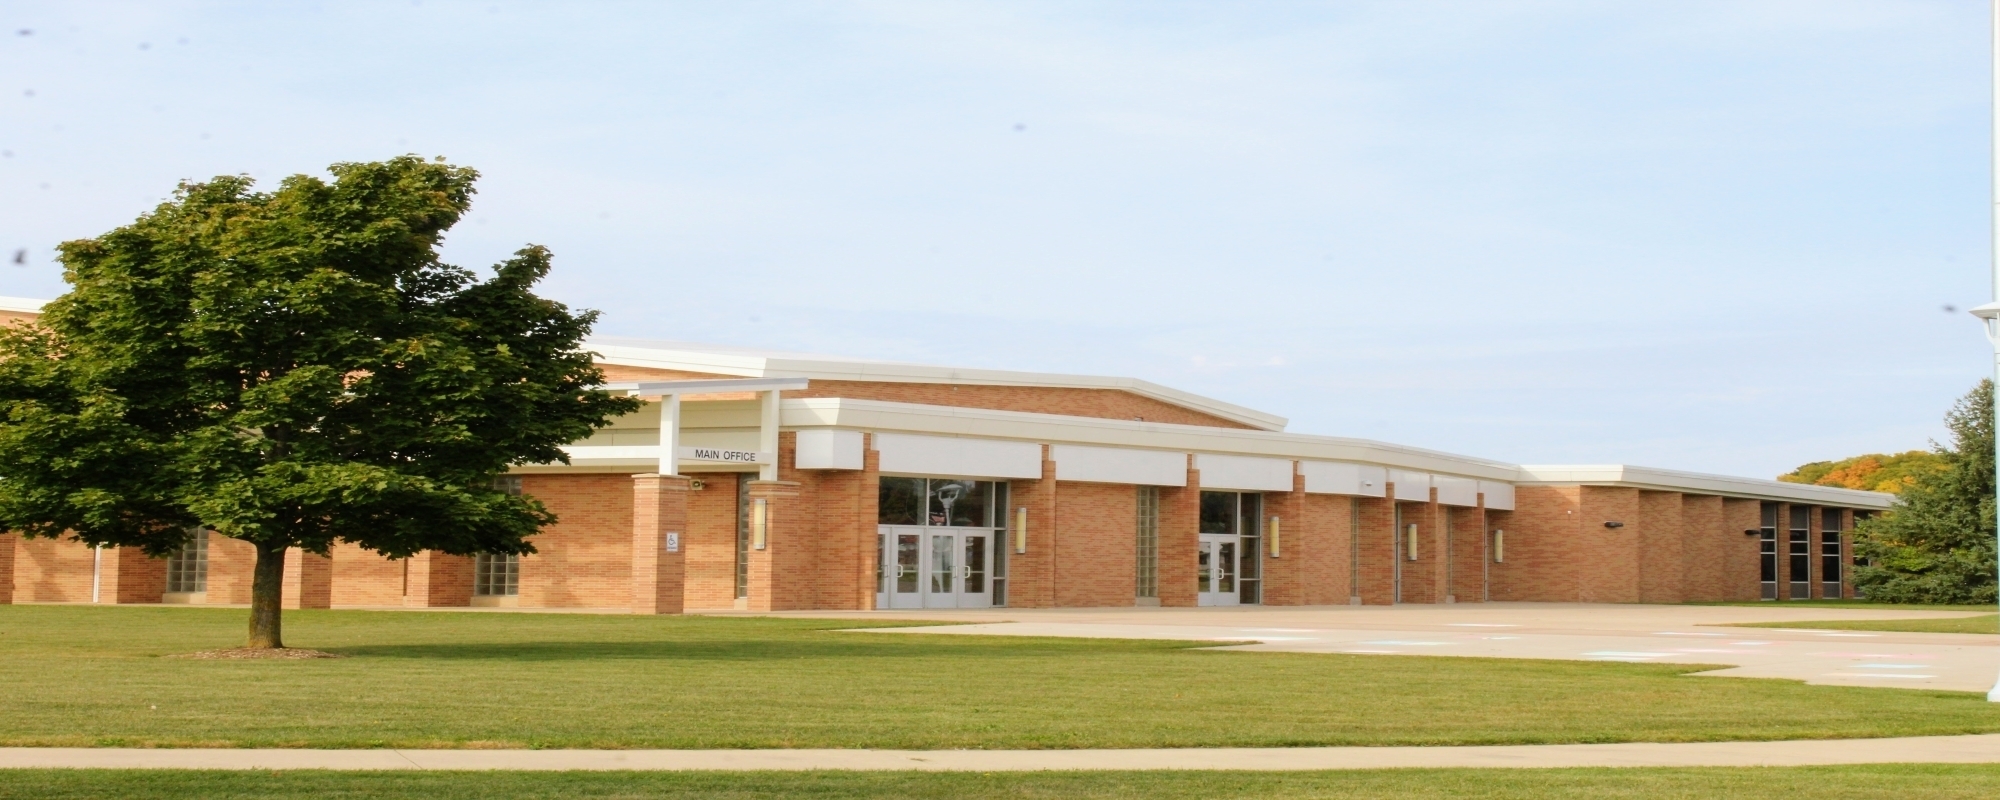 Main Office Entrance - High School 2022